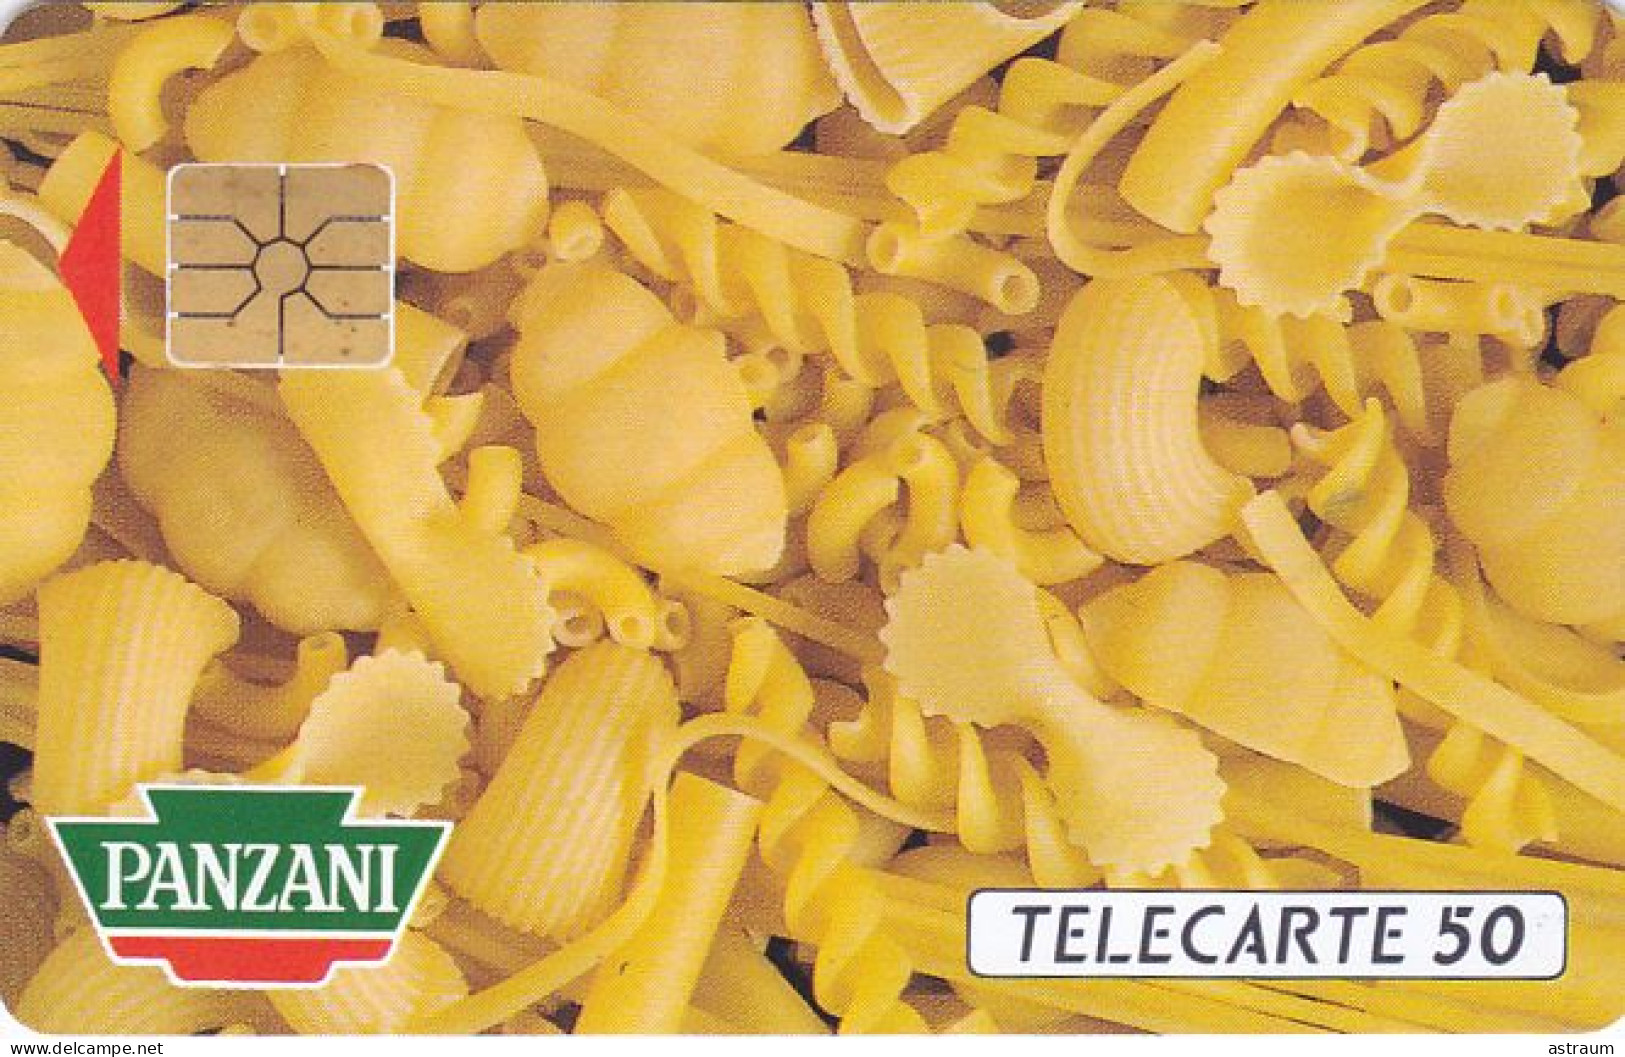 Telecarte Privée D331 NEUVE - Panzani - So2 - 1135 Ex - 50 Un - 1990 - Privat